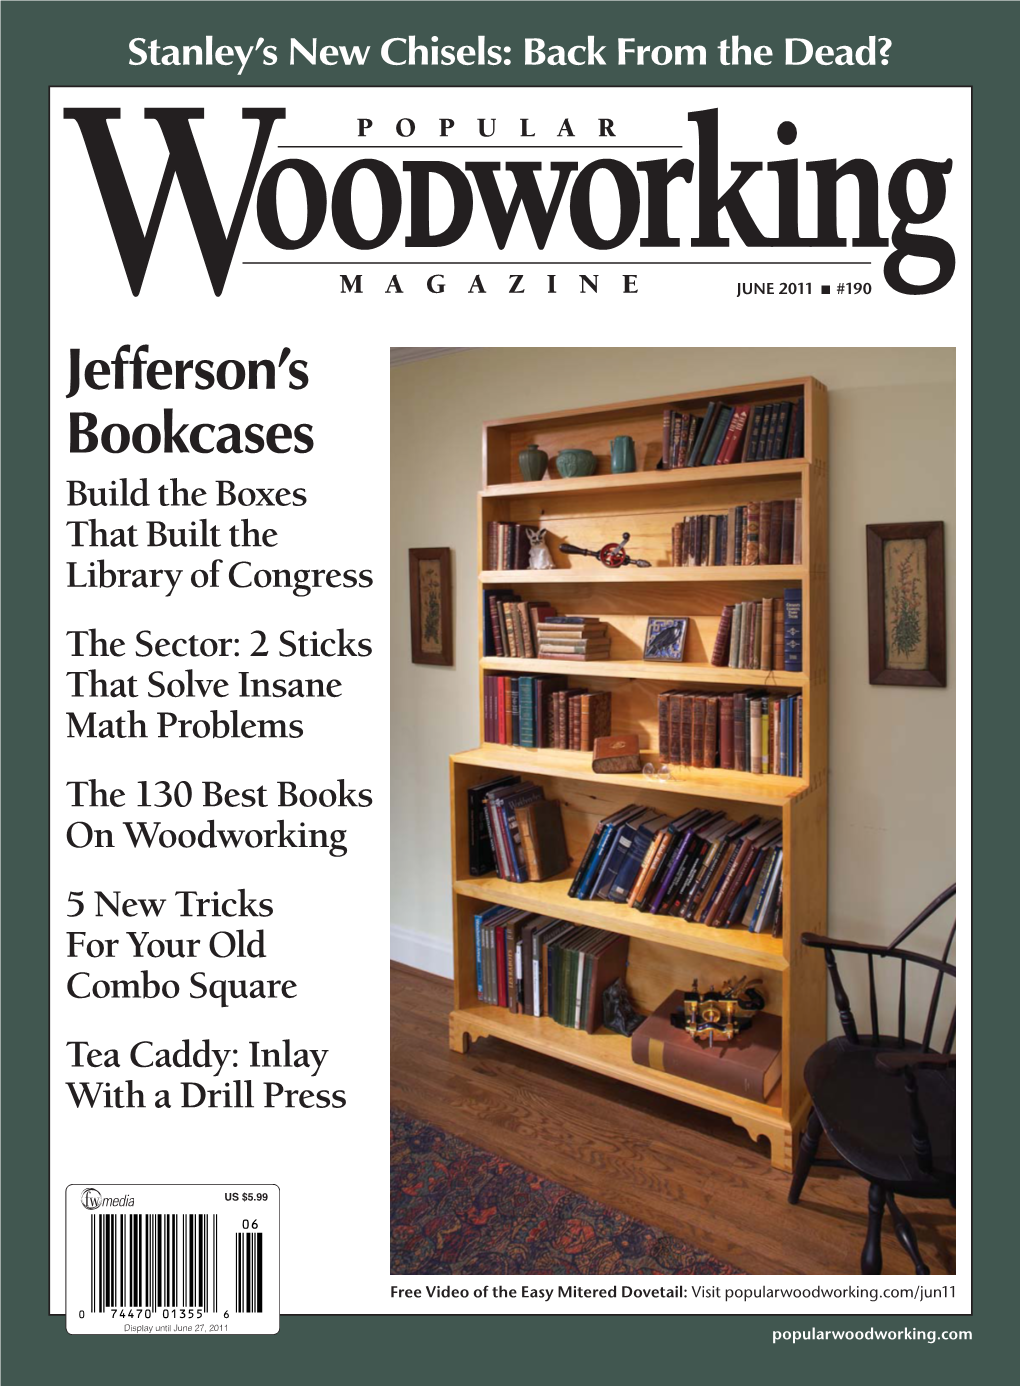 Popular Woodworking Magazine's